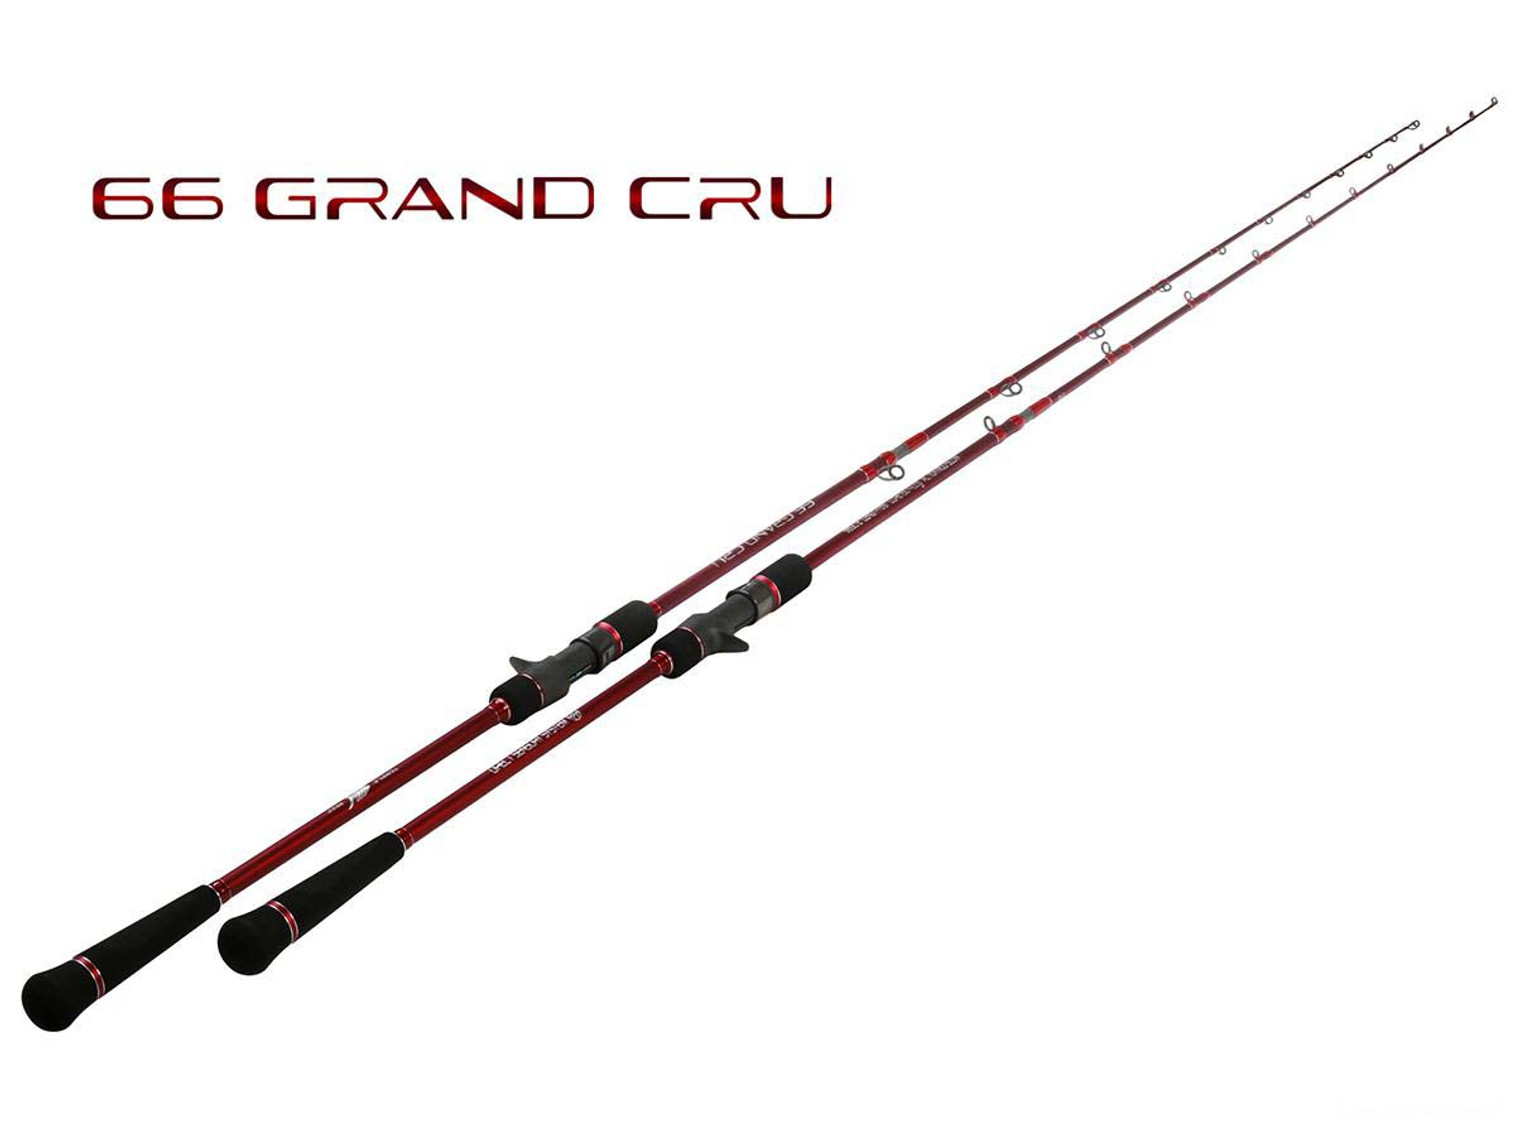 Temple Reef Grand Cru Slow Pitch Jig Fishing Rod (Model: 66GC-2)